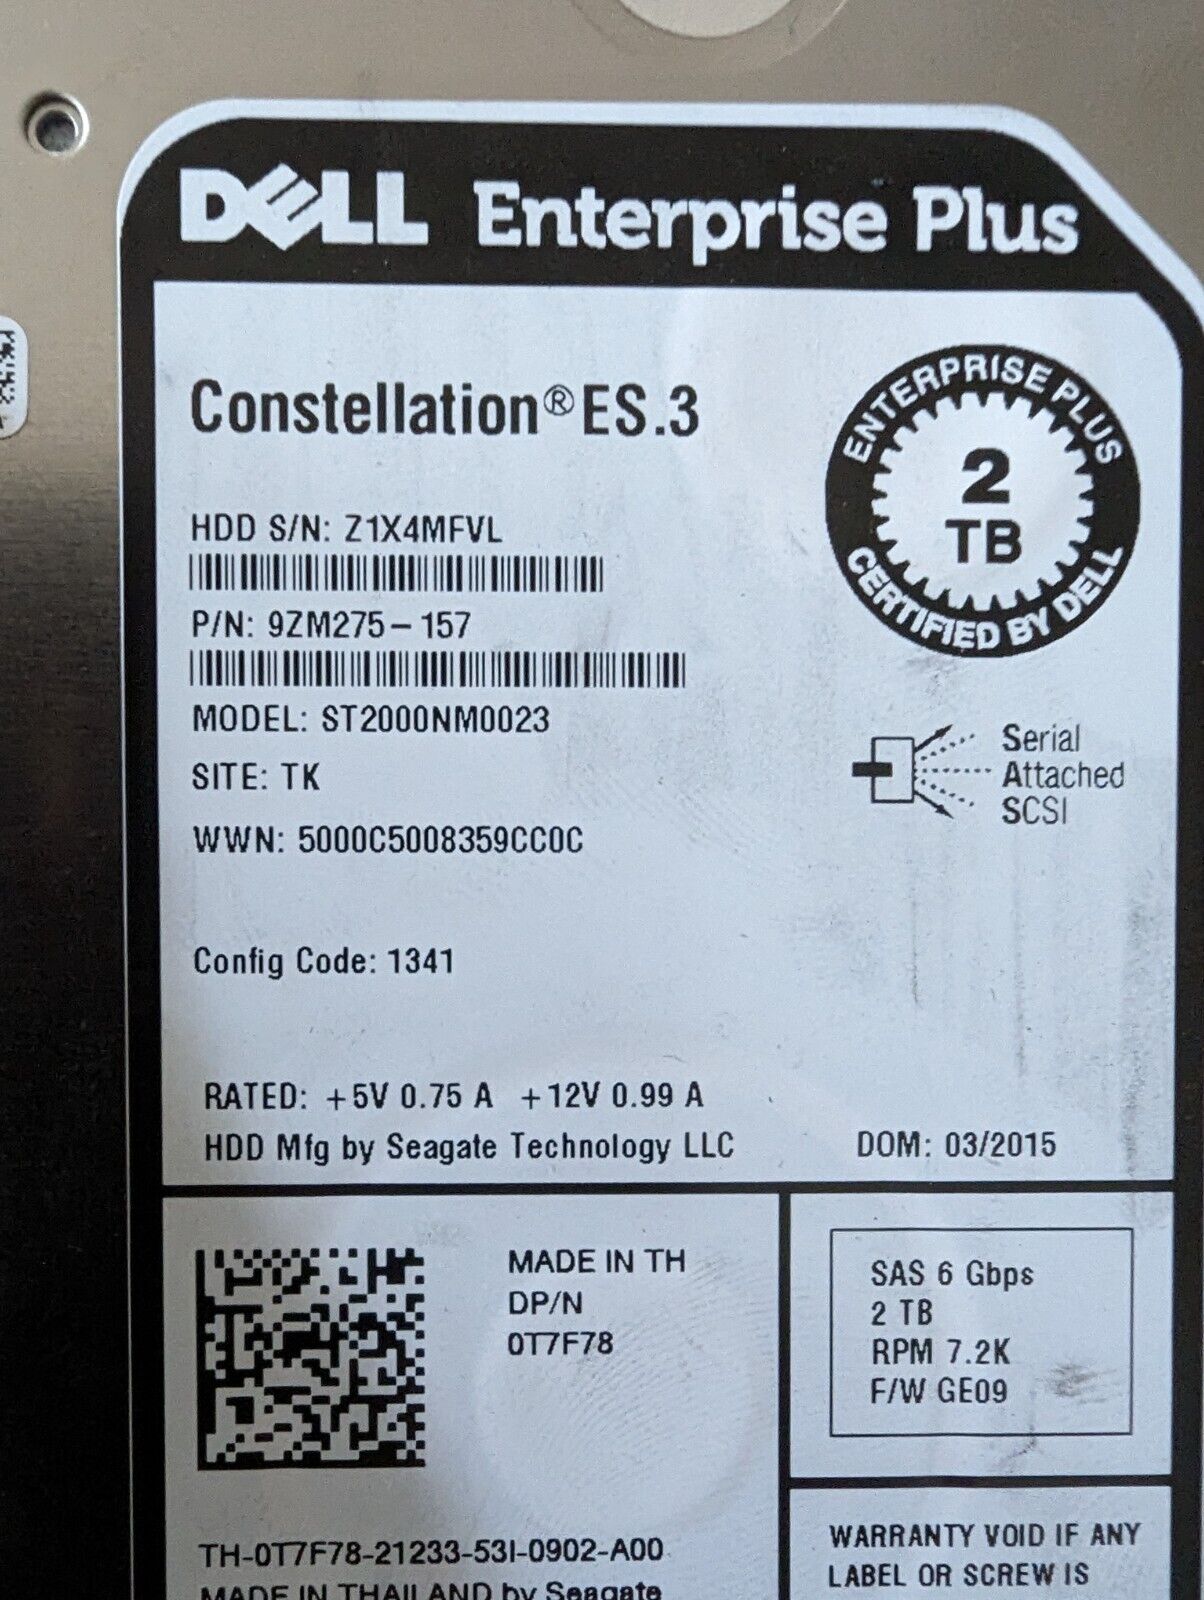 Dell EqualLogic Enterprise Plus Constellation ES.3 9ZM275-157 2TB SAS HDD 6Gb/s